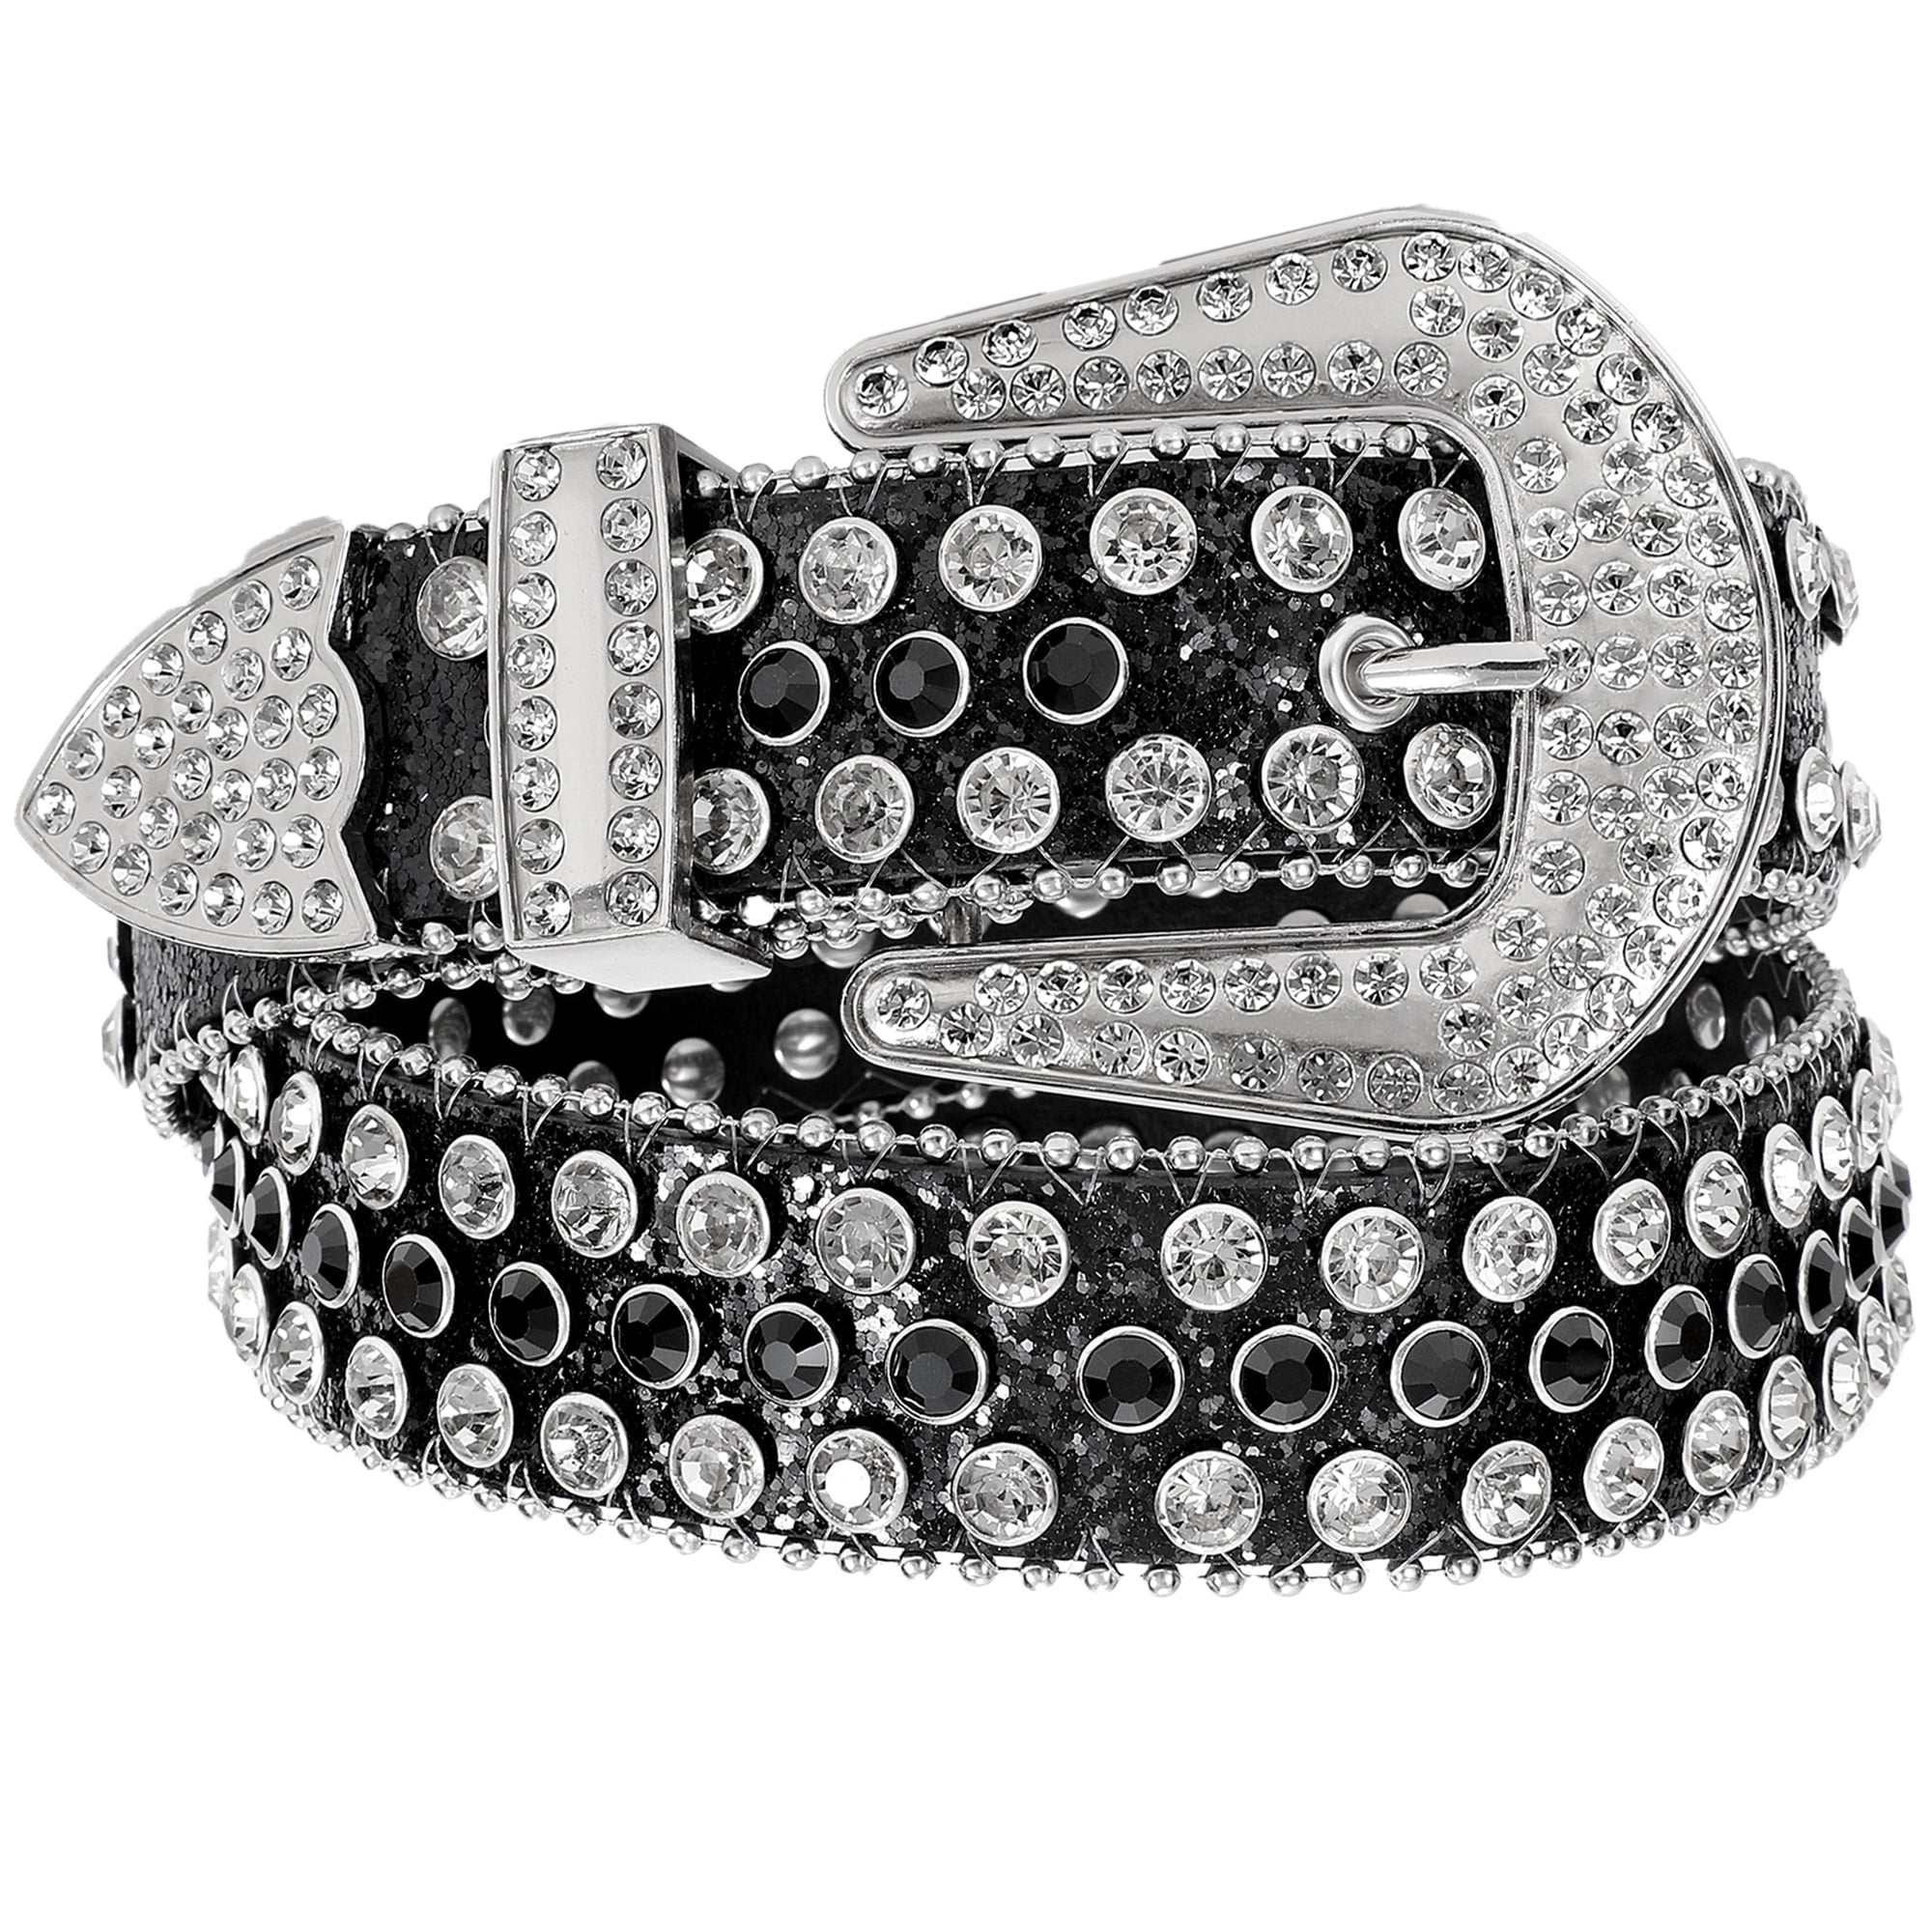 JASGOOD Rhinestone Belts for Women Western Crystal Studded Design Black ...